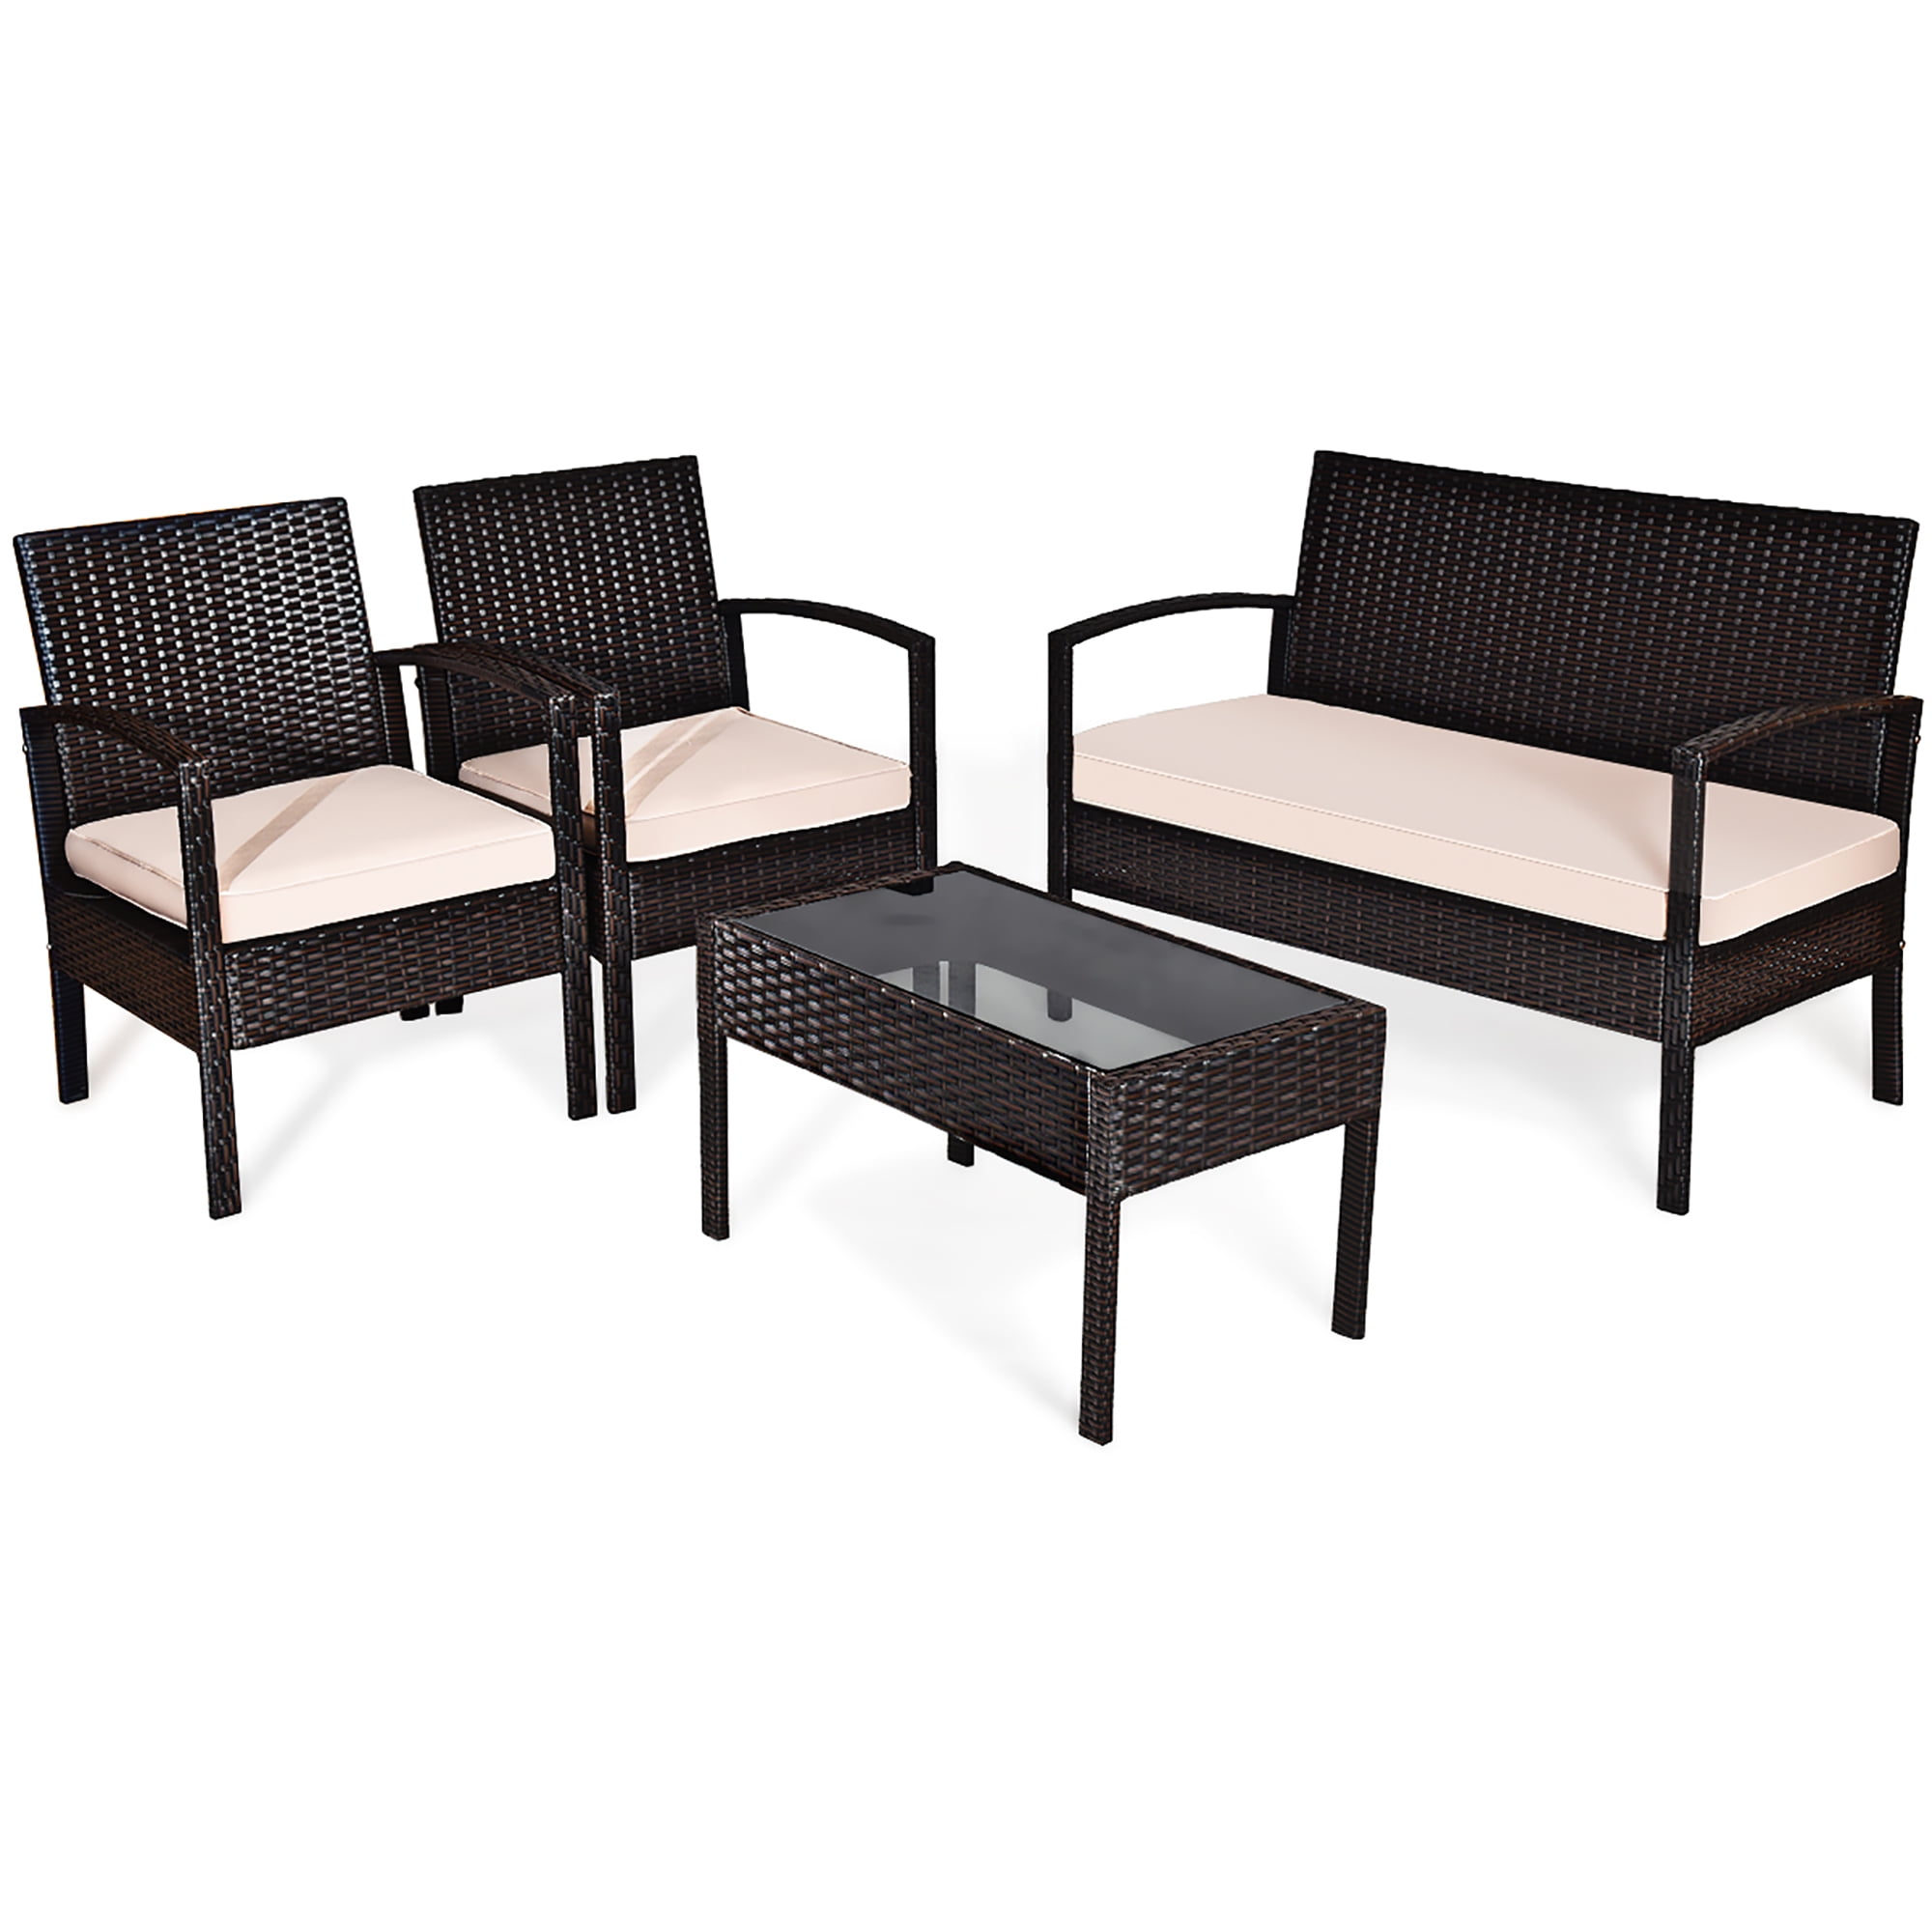 4 PCS Patio Furniture Set Sofa Coffee Table Steel Frame Garden Deck Black New 